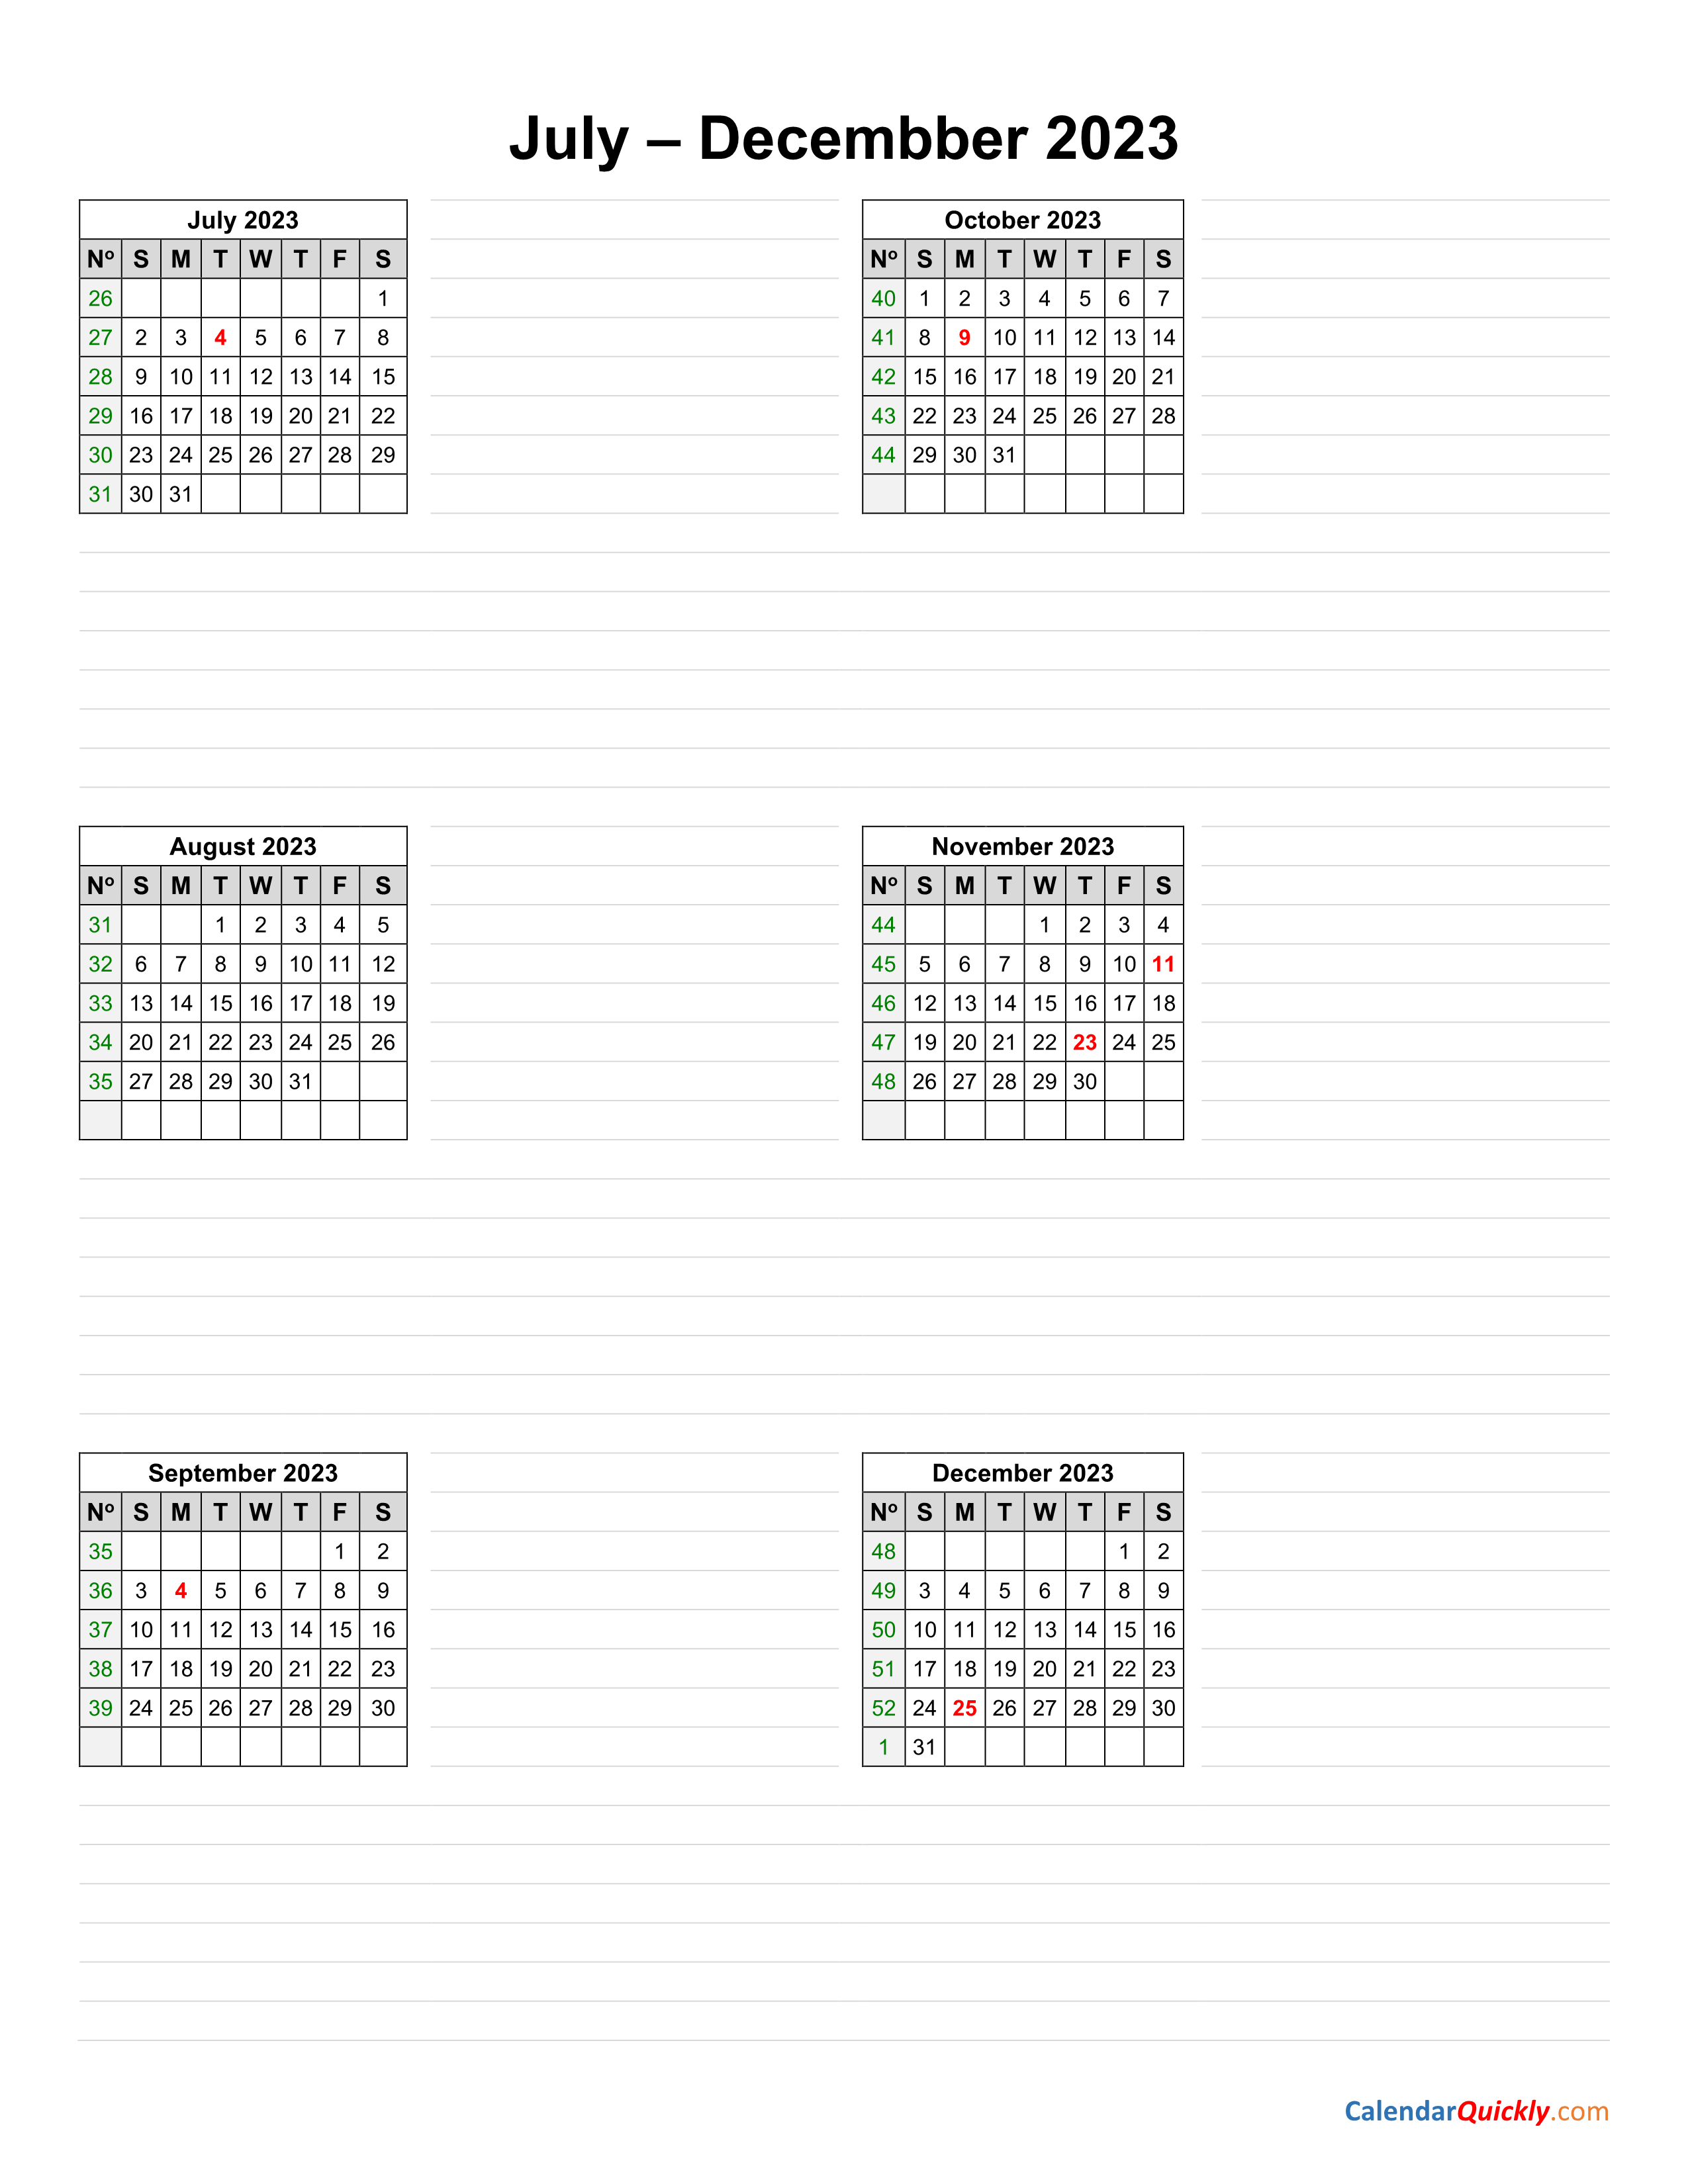 july-to-december-2023-calendar-vertical-calendar-quickly